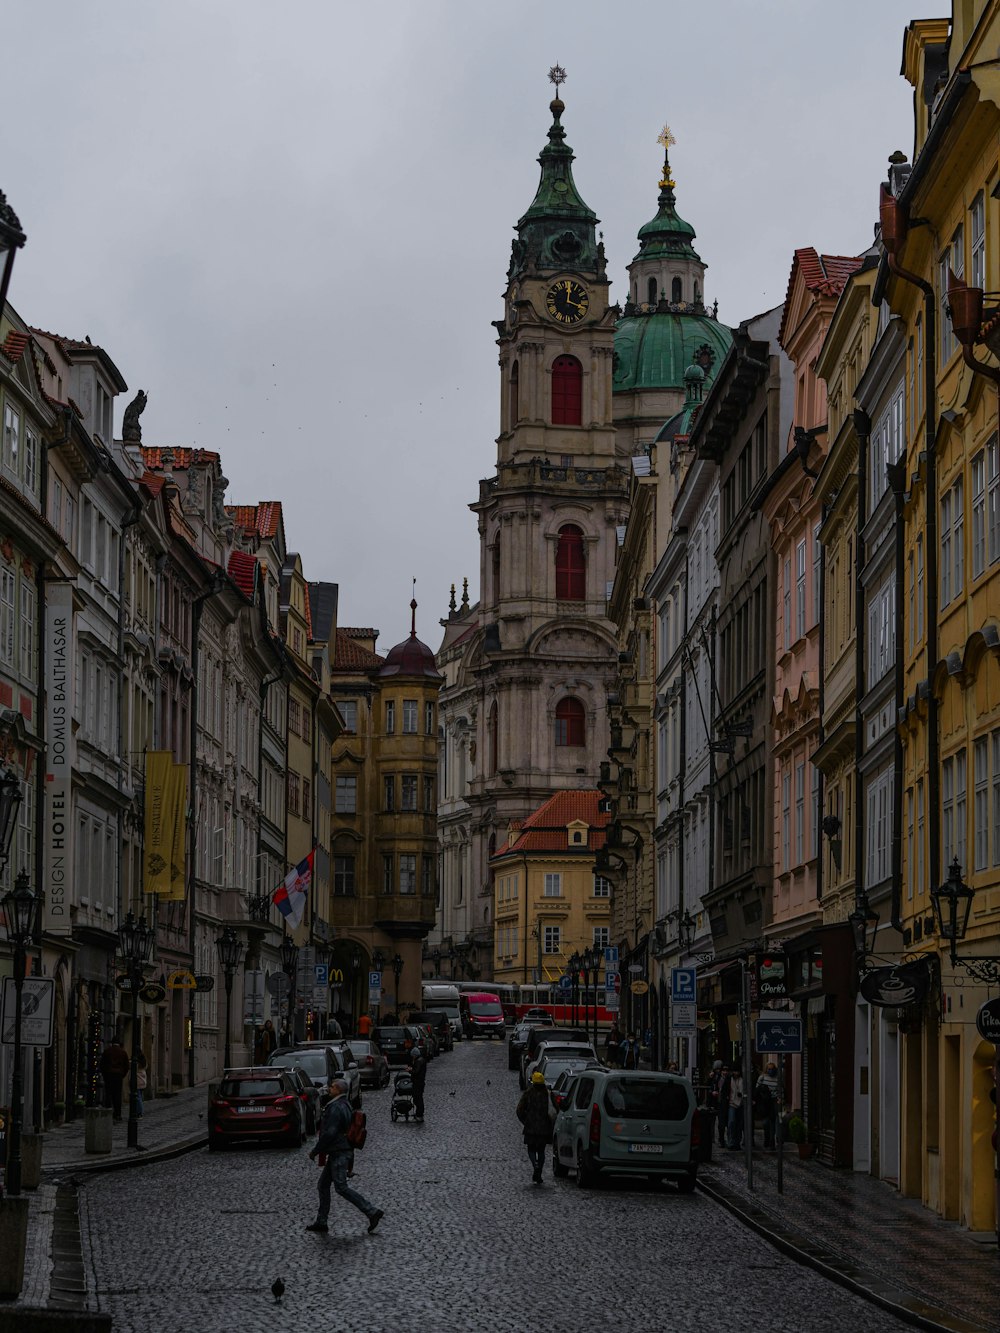 a person walking down a cobblestone street in a city